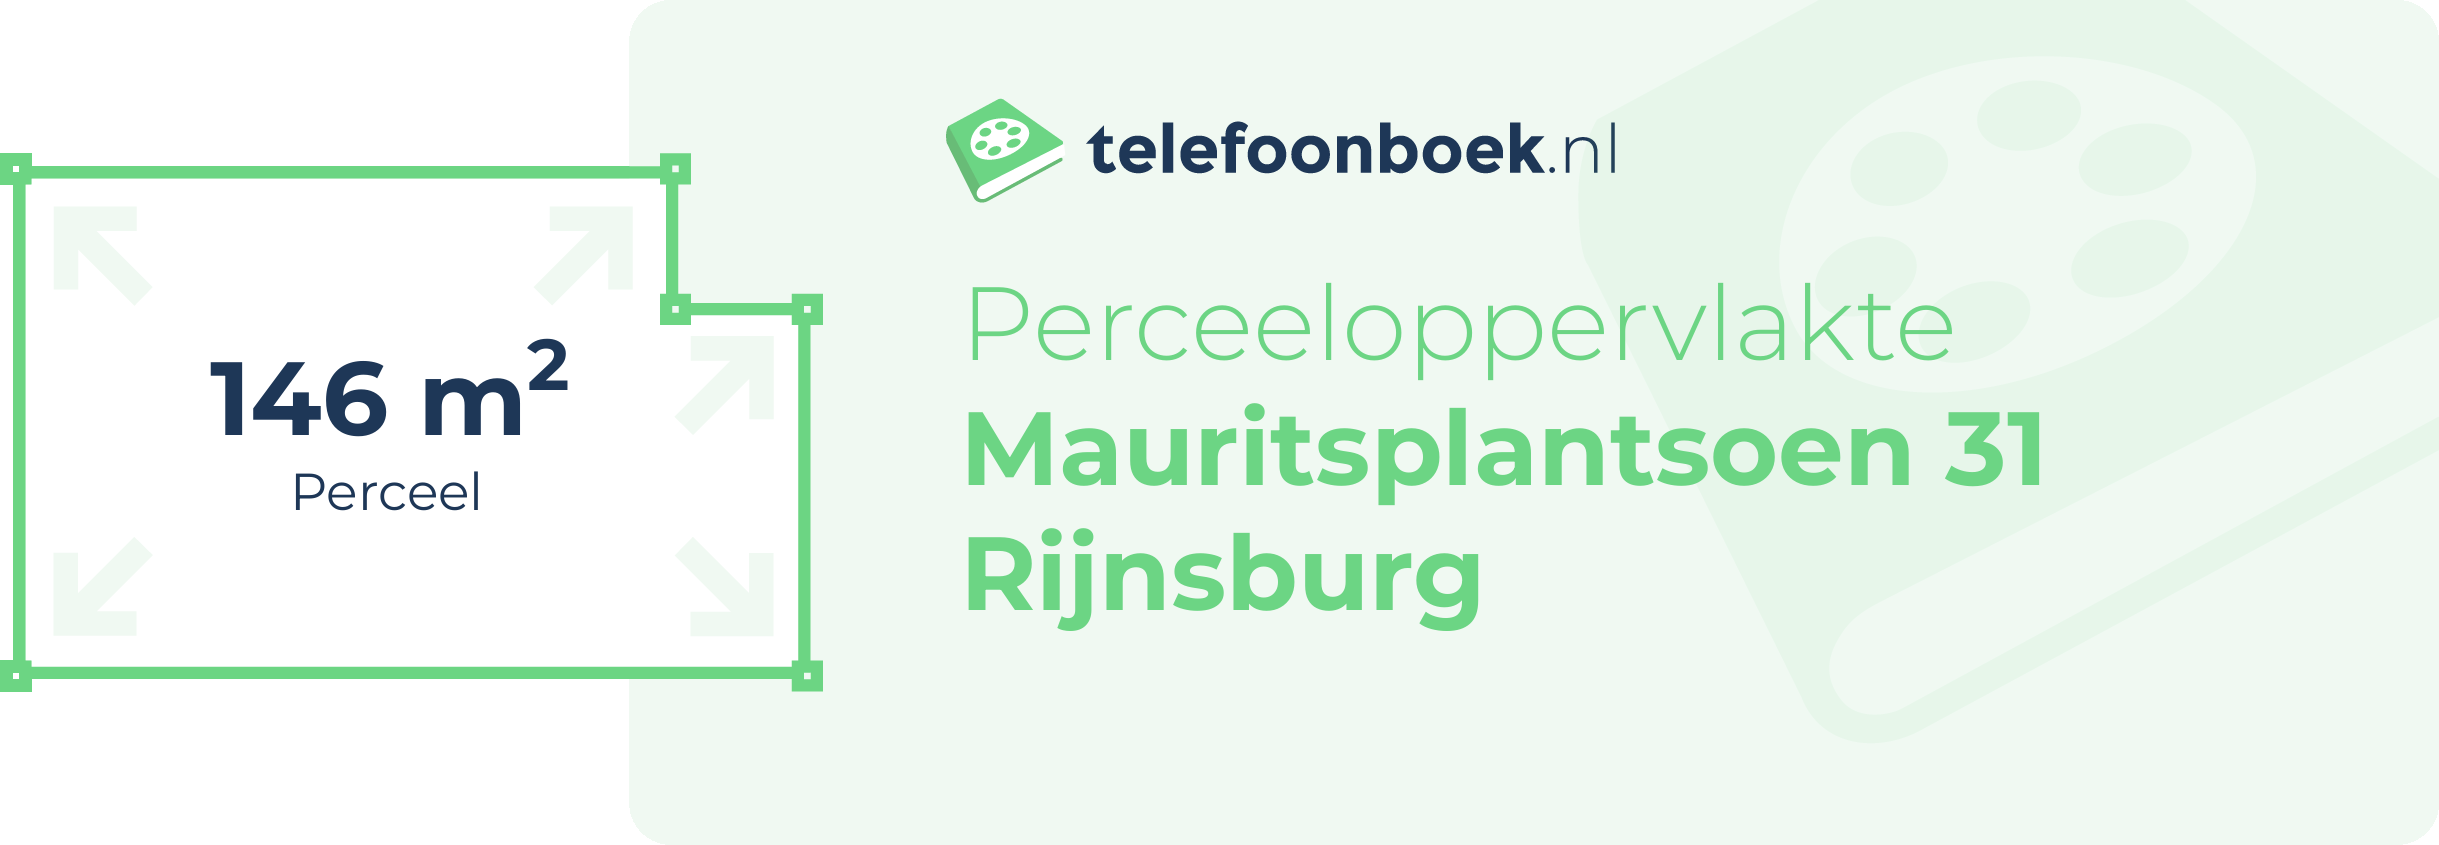 Perceeloppervlakte Mauritsplantsoen 31 Rijnsburg